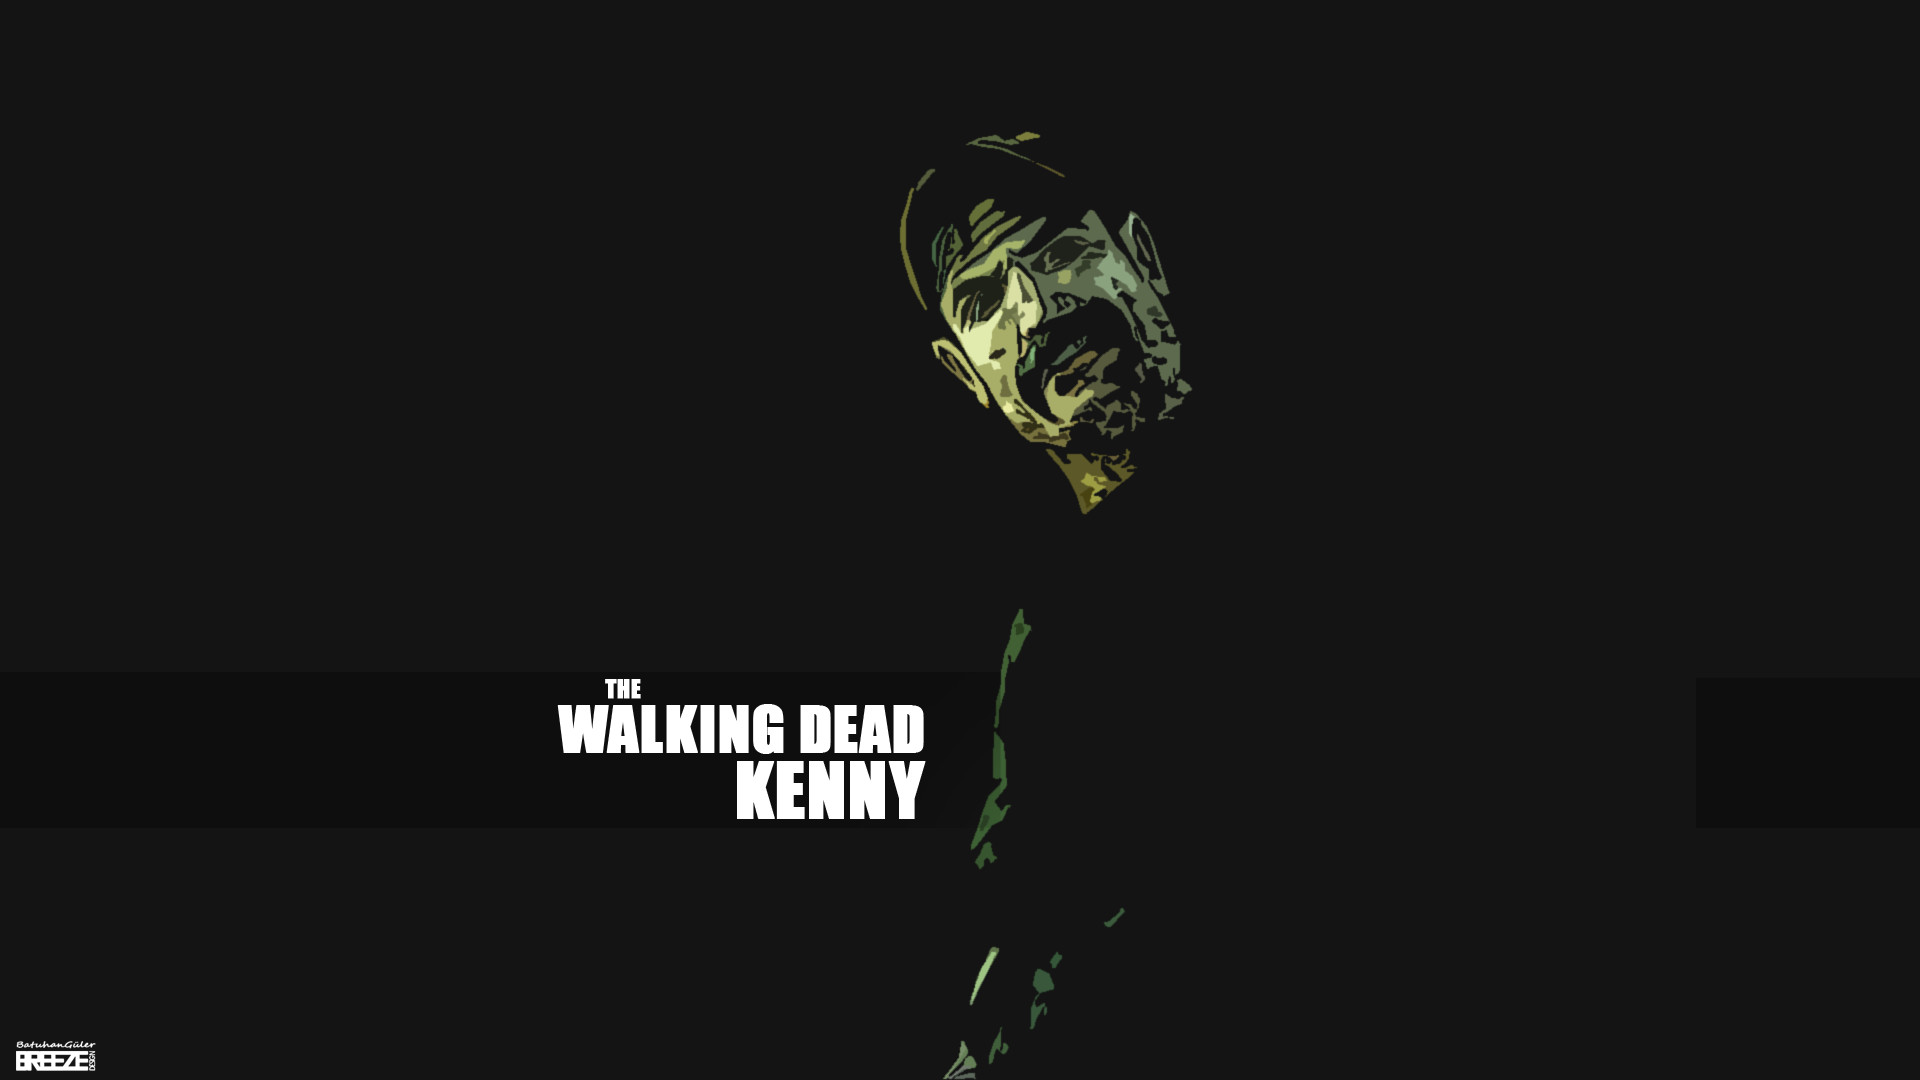 The Walking Dead Kenny – Wallpaper by Syrastra